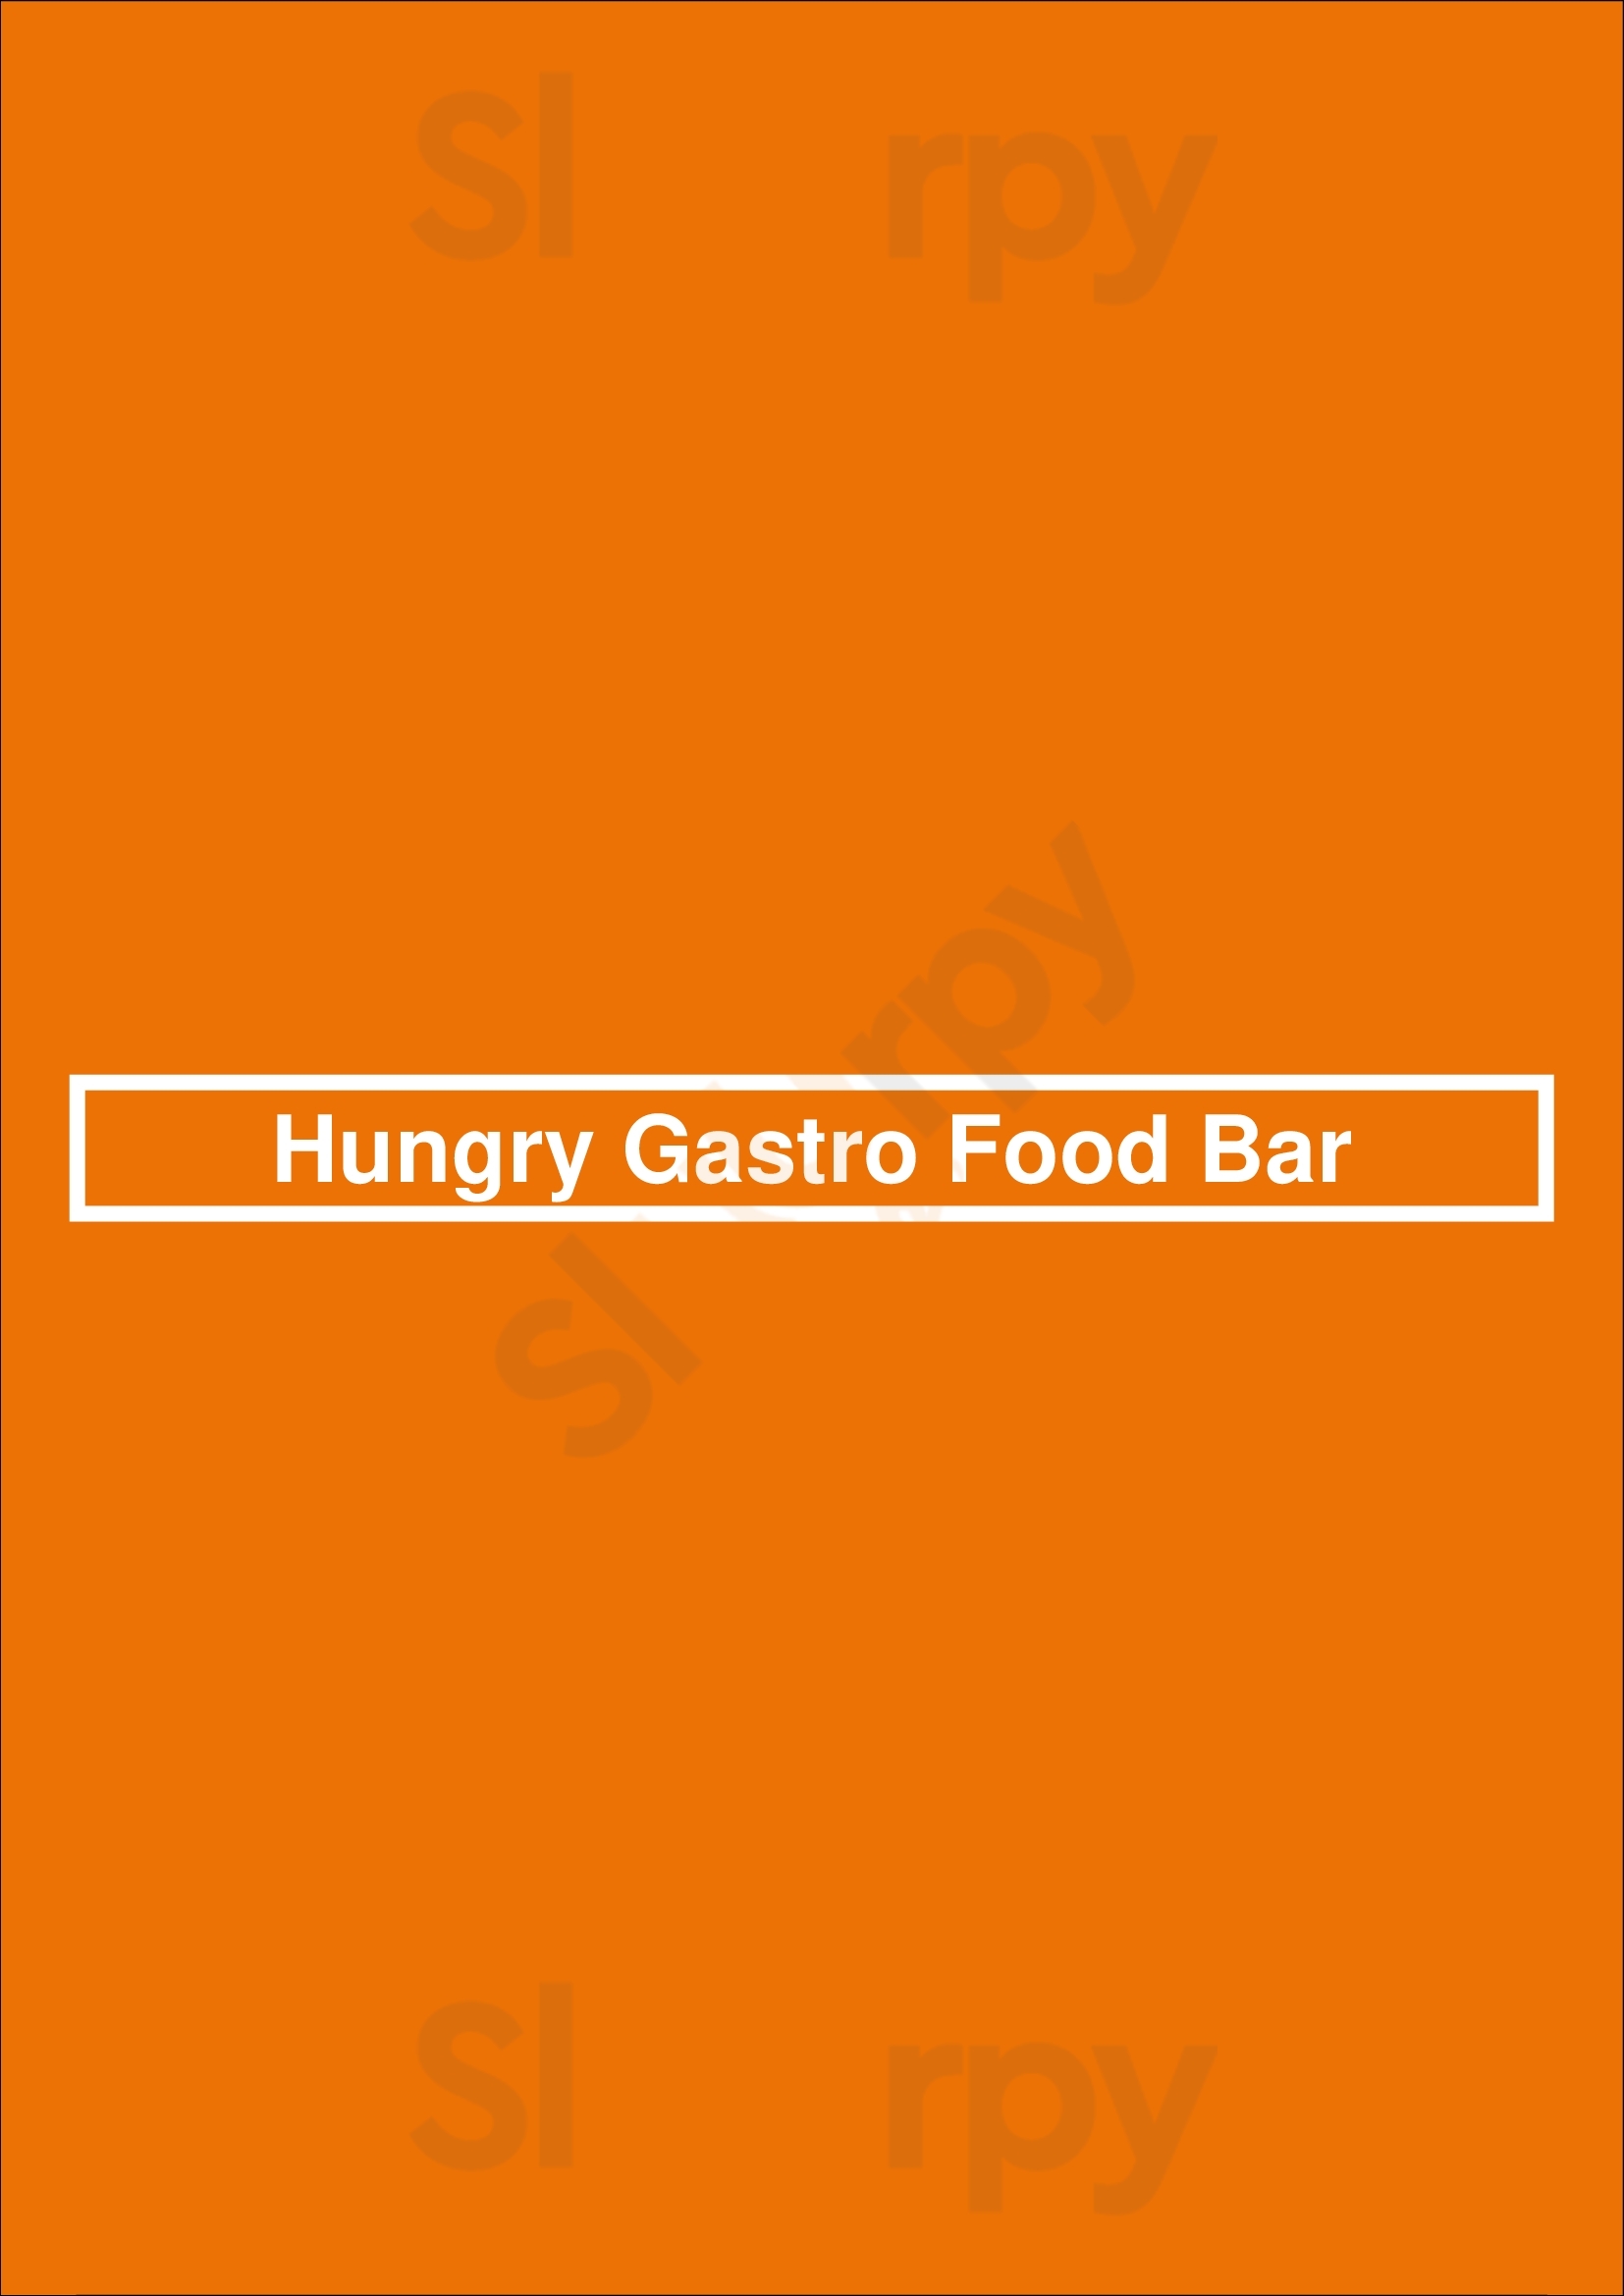 Hungry Gastro Food Bar Palma de Mallorca Menu - 1